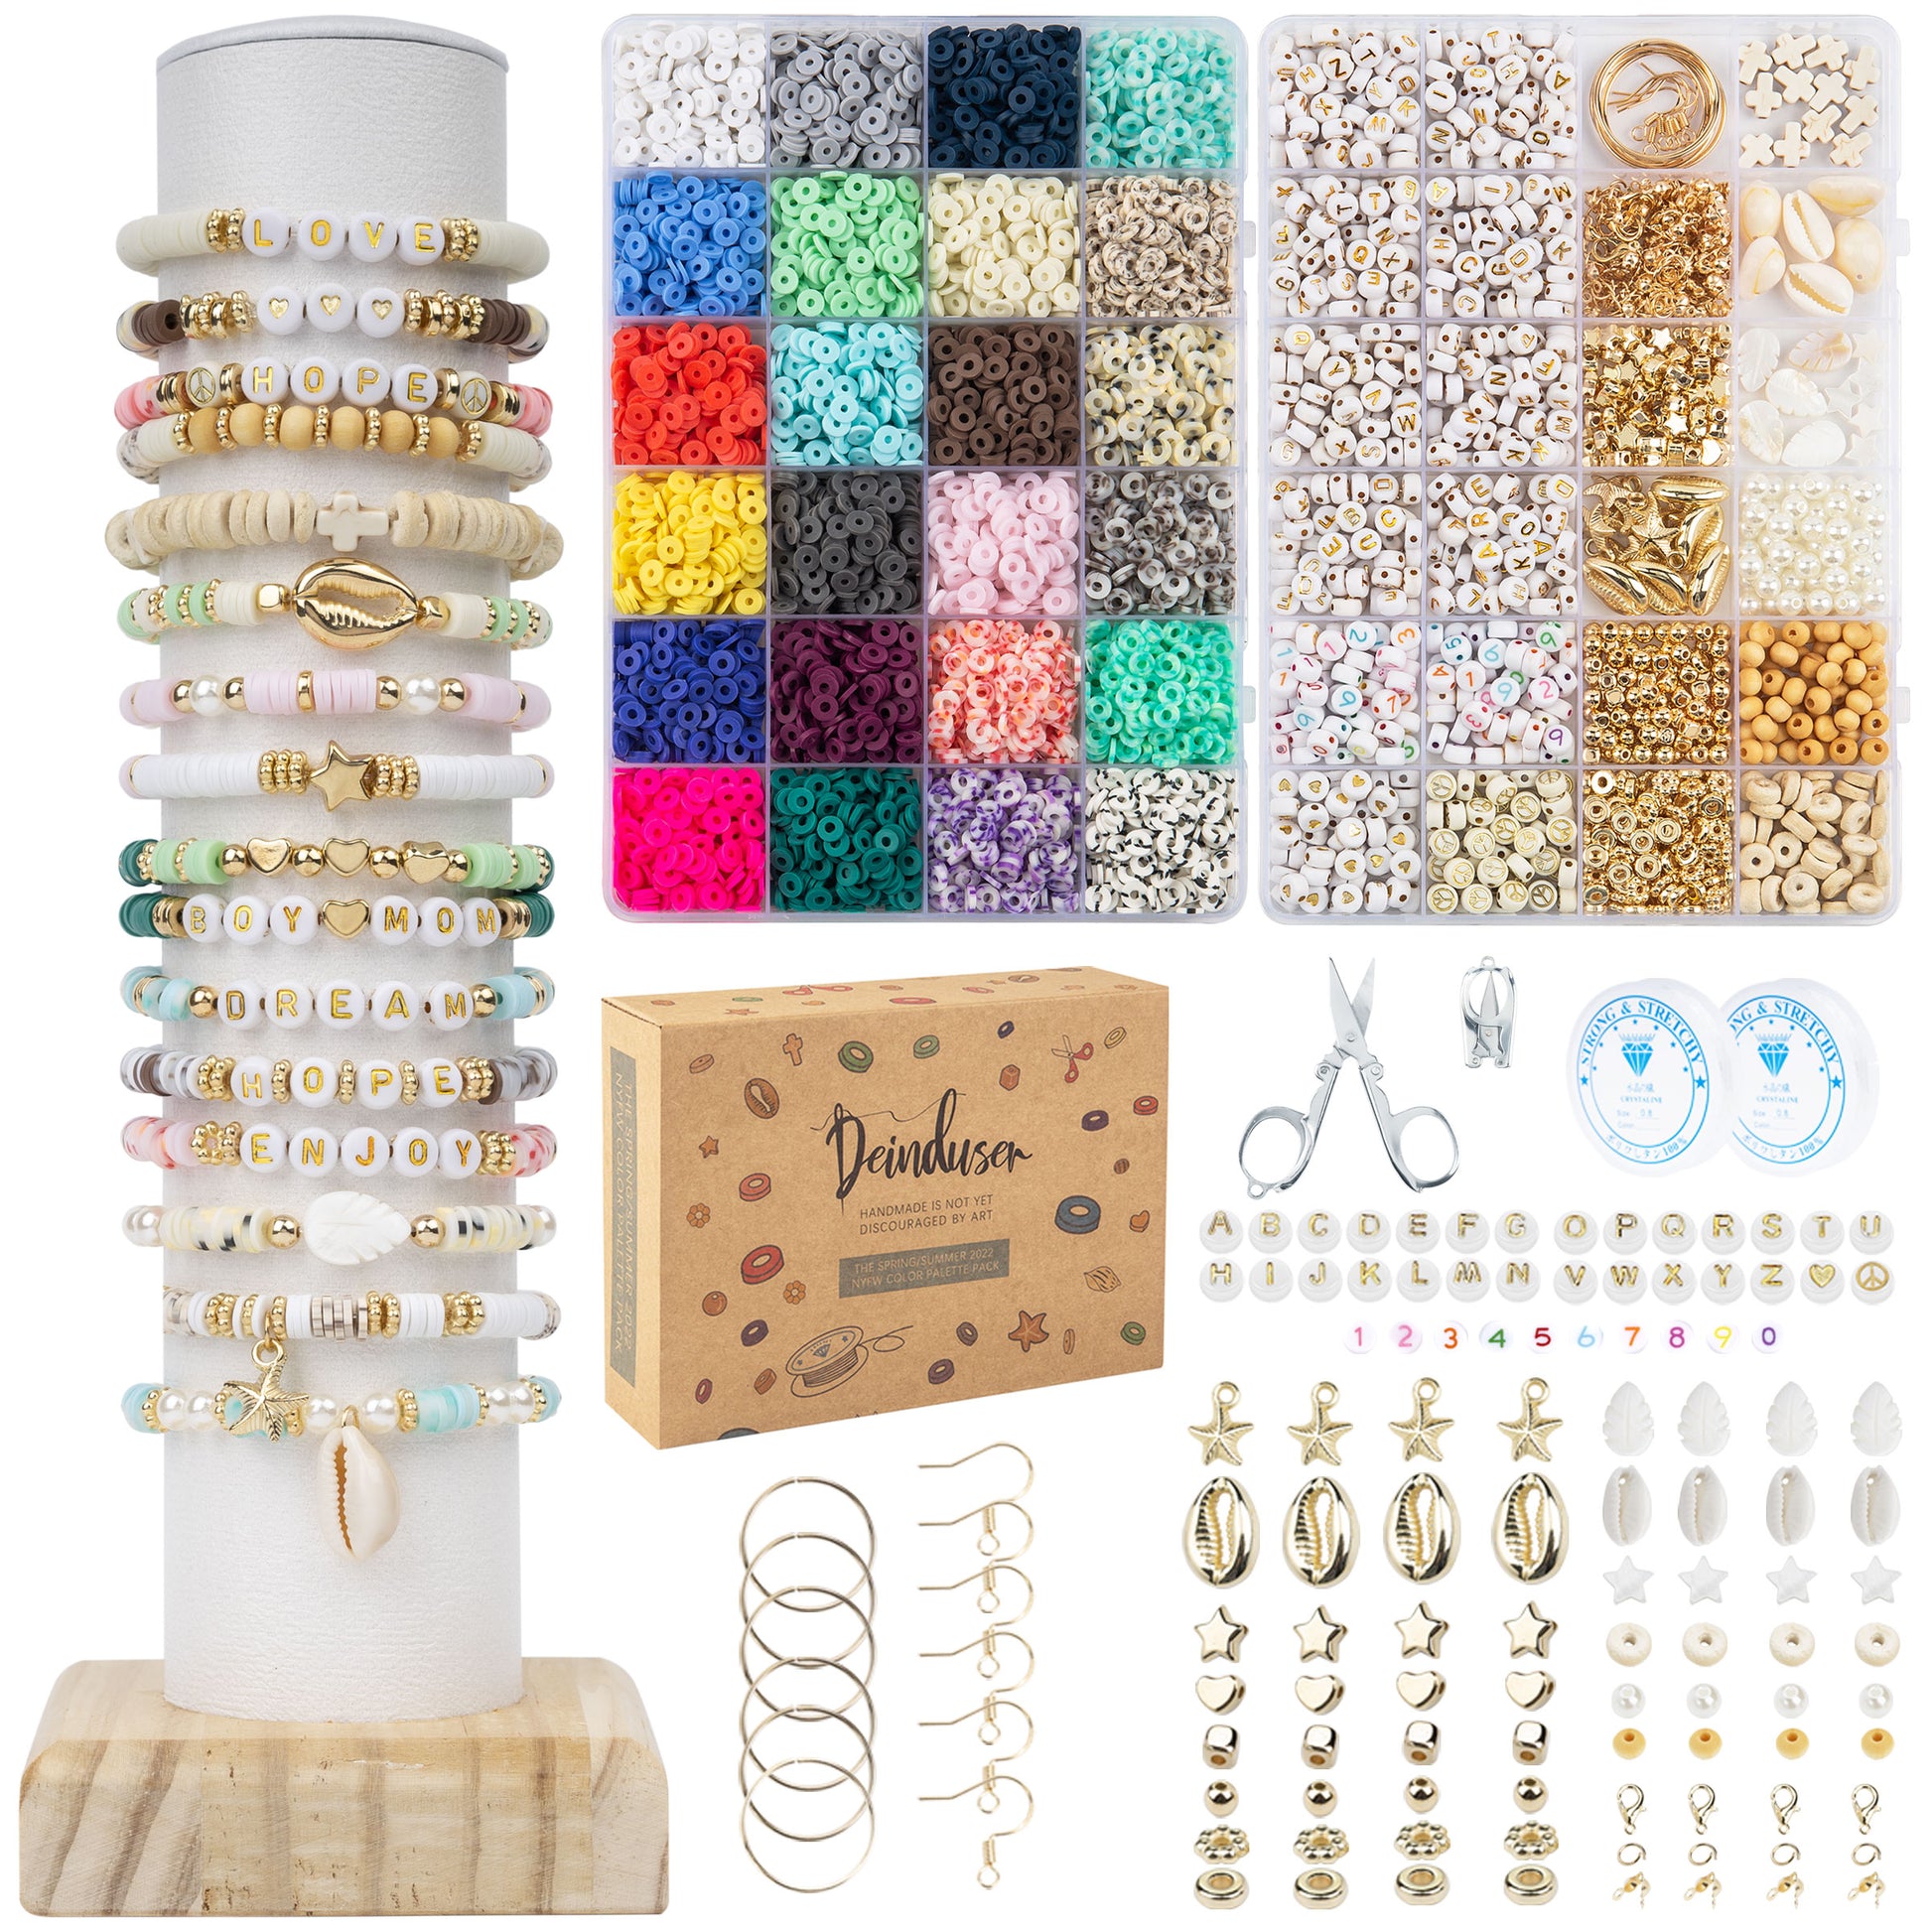 RECUTMS Jewelry Making Kit 2 Packs,6000 Pcs DIY Clay Bead